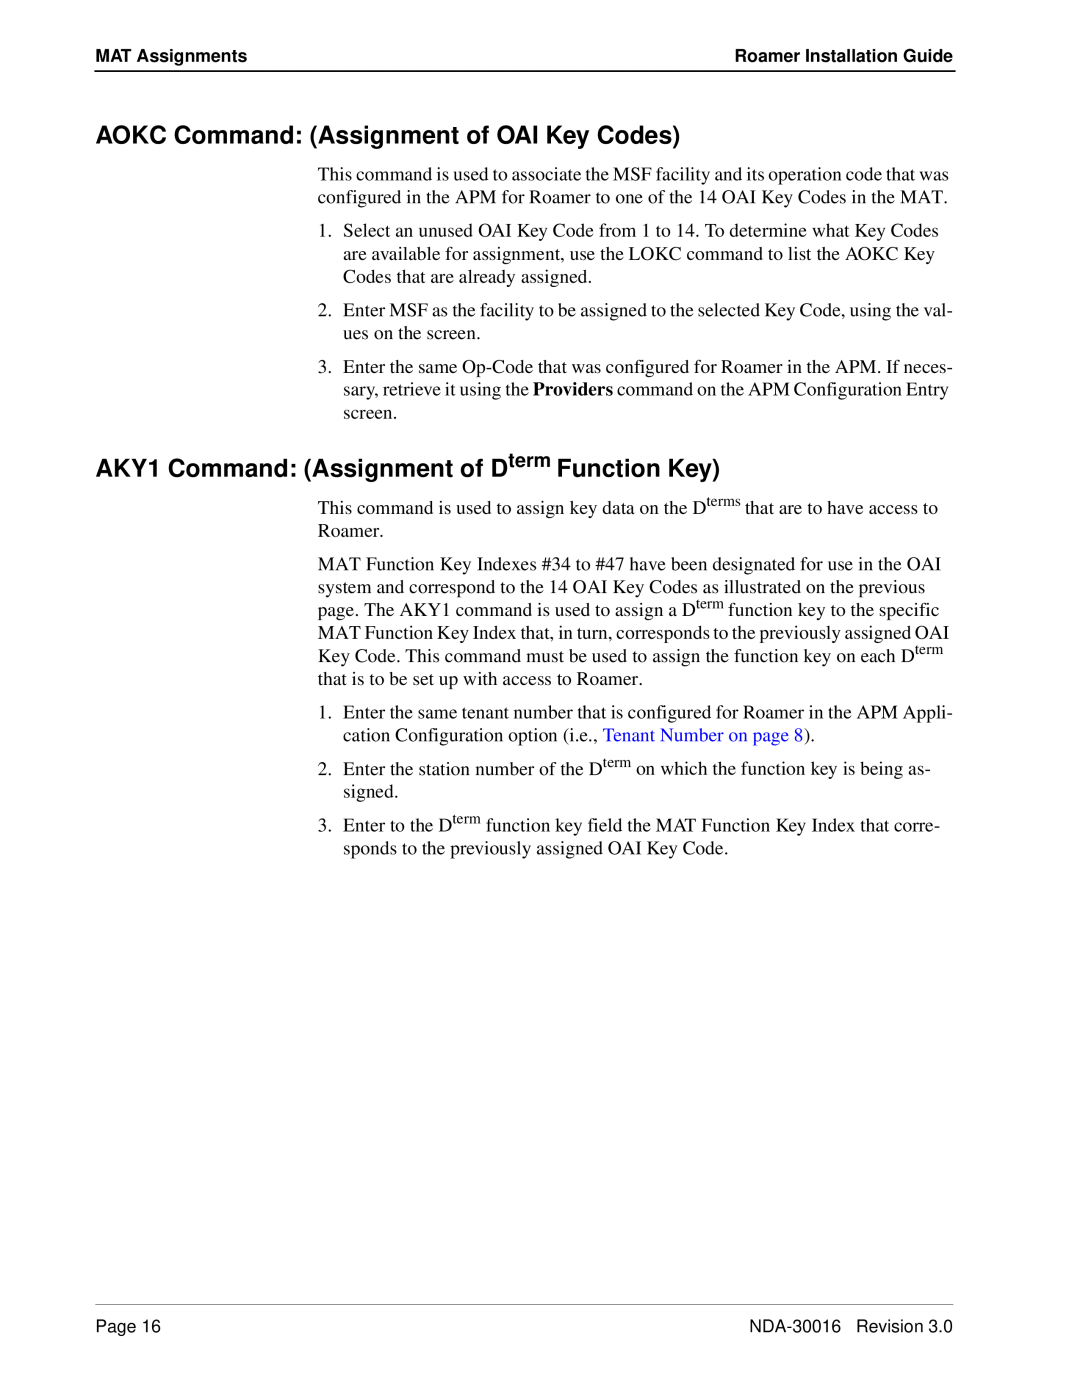 NEC NDA-30016-003 manual AOKC Command Assignment of OAI Key Codes, AKY1 Command Assignment of Dterm Function Key 